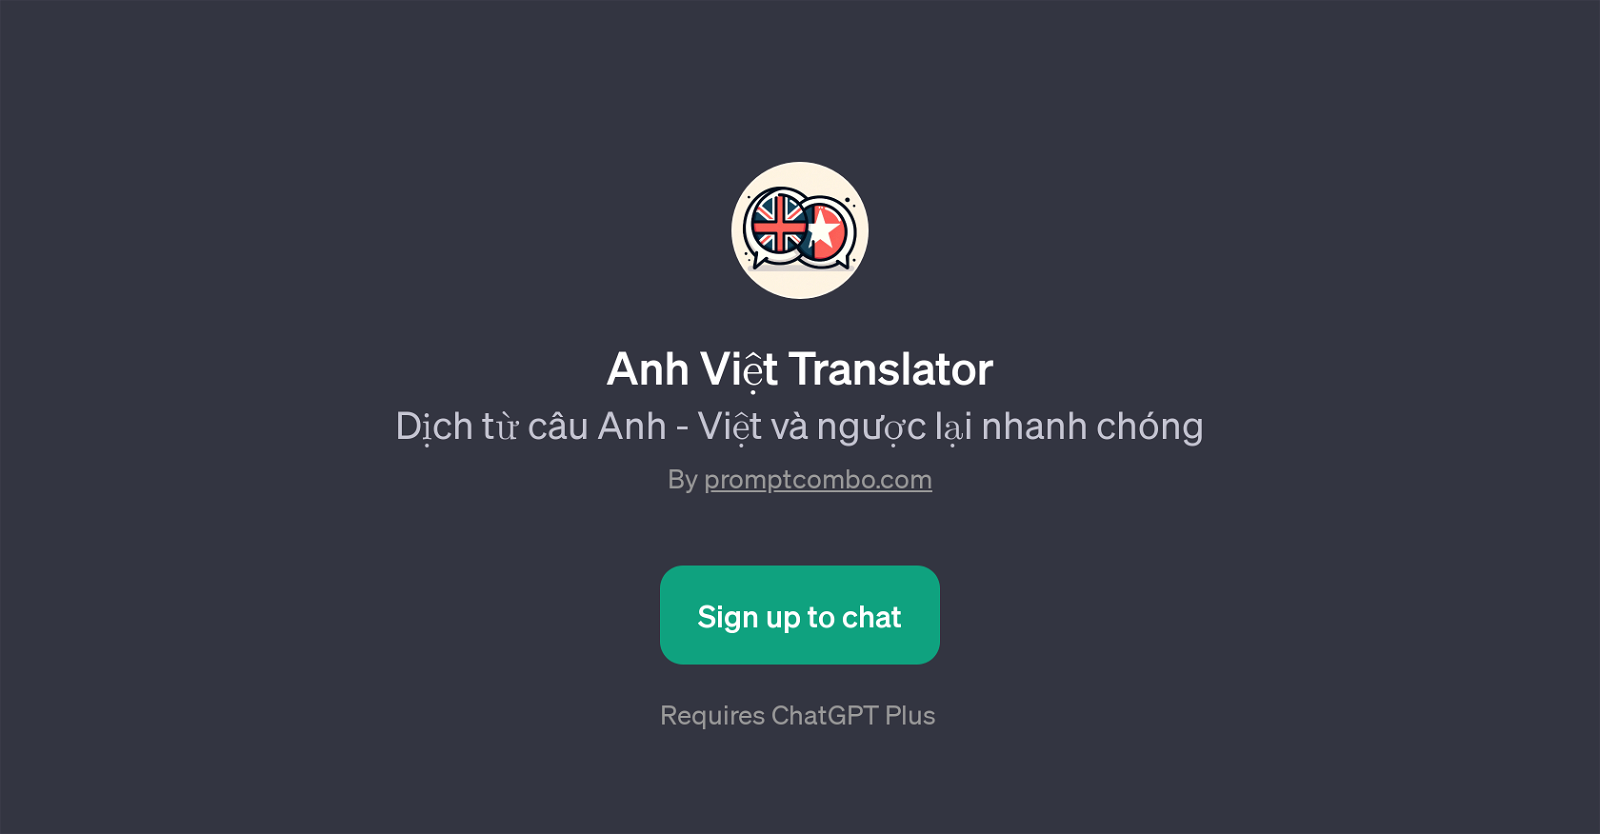 Anh Vit Translator website